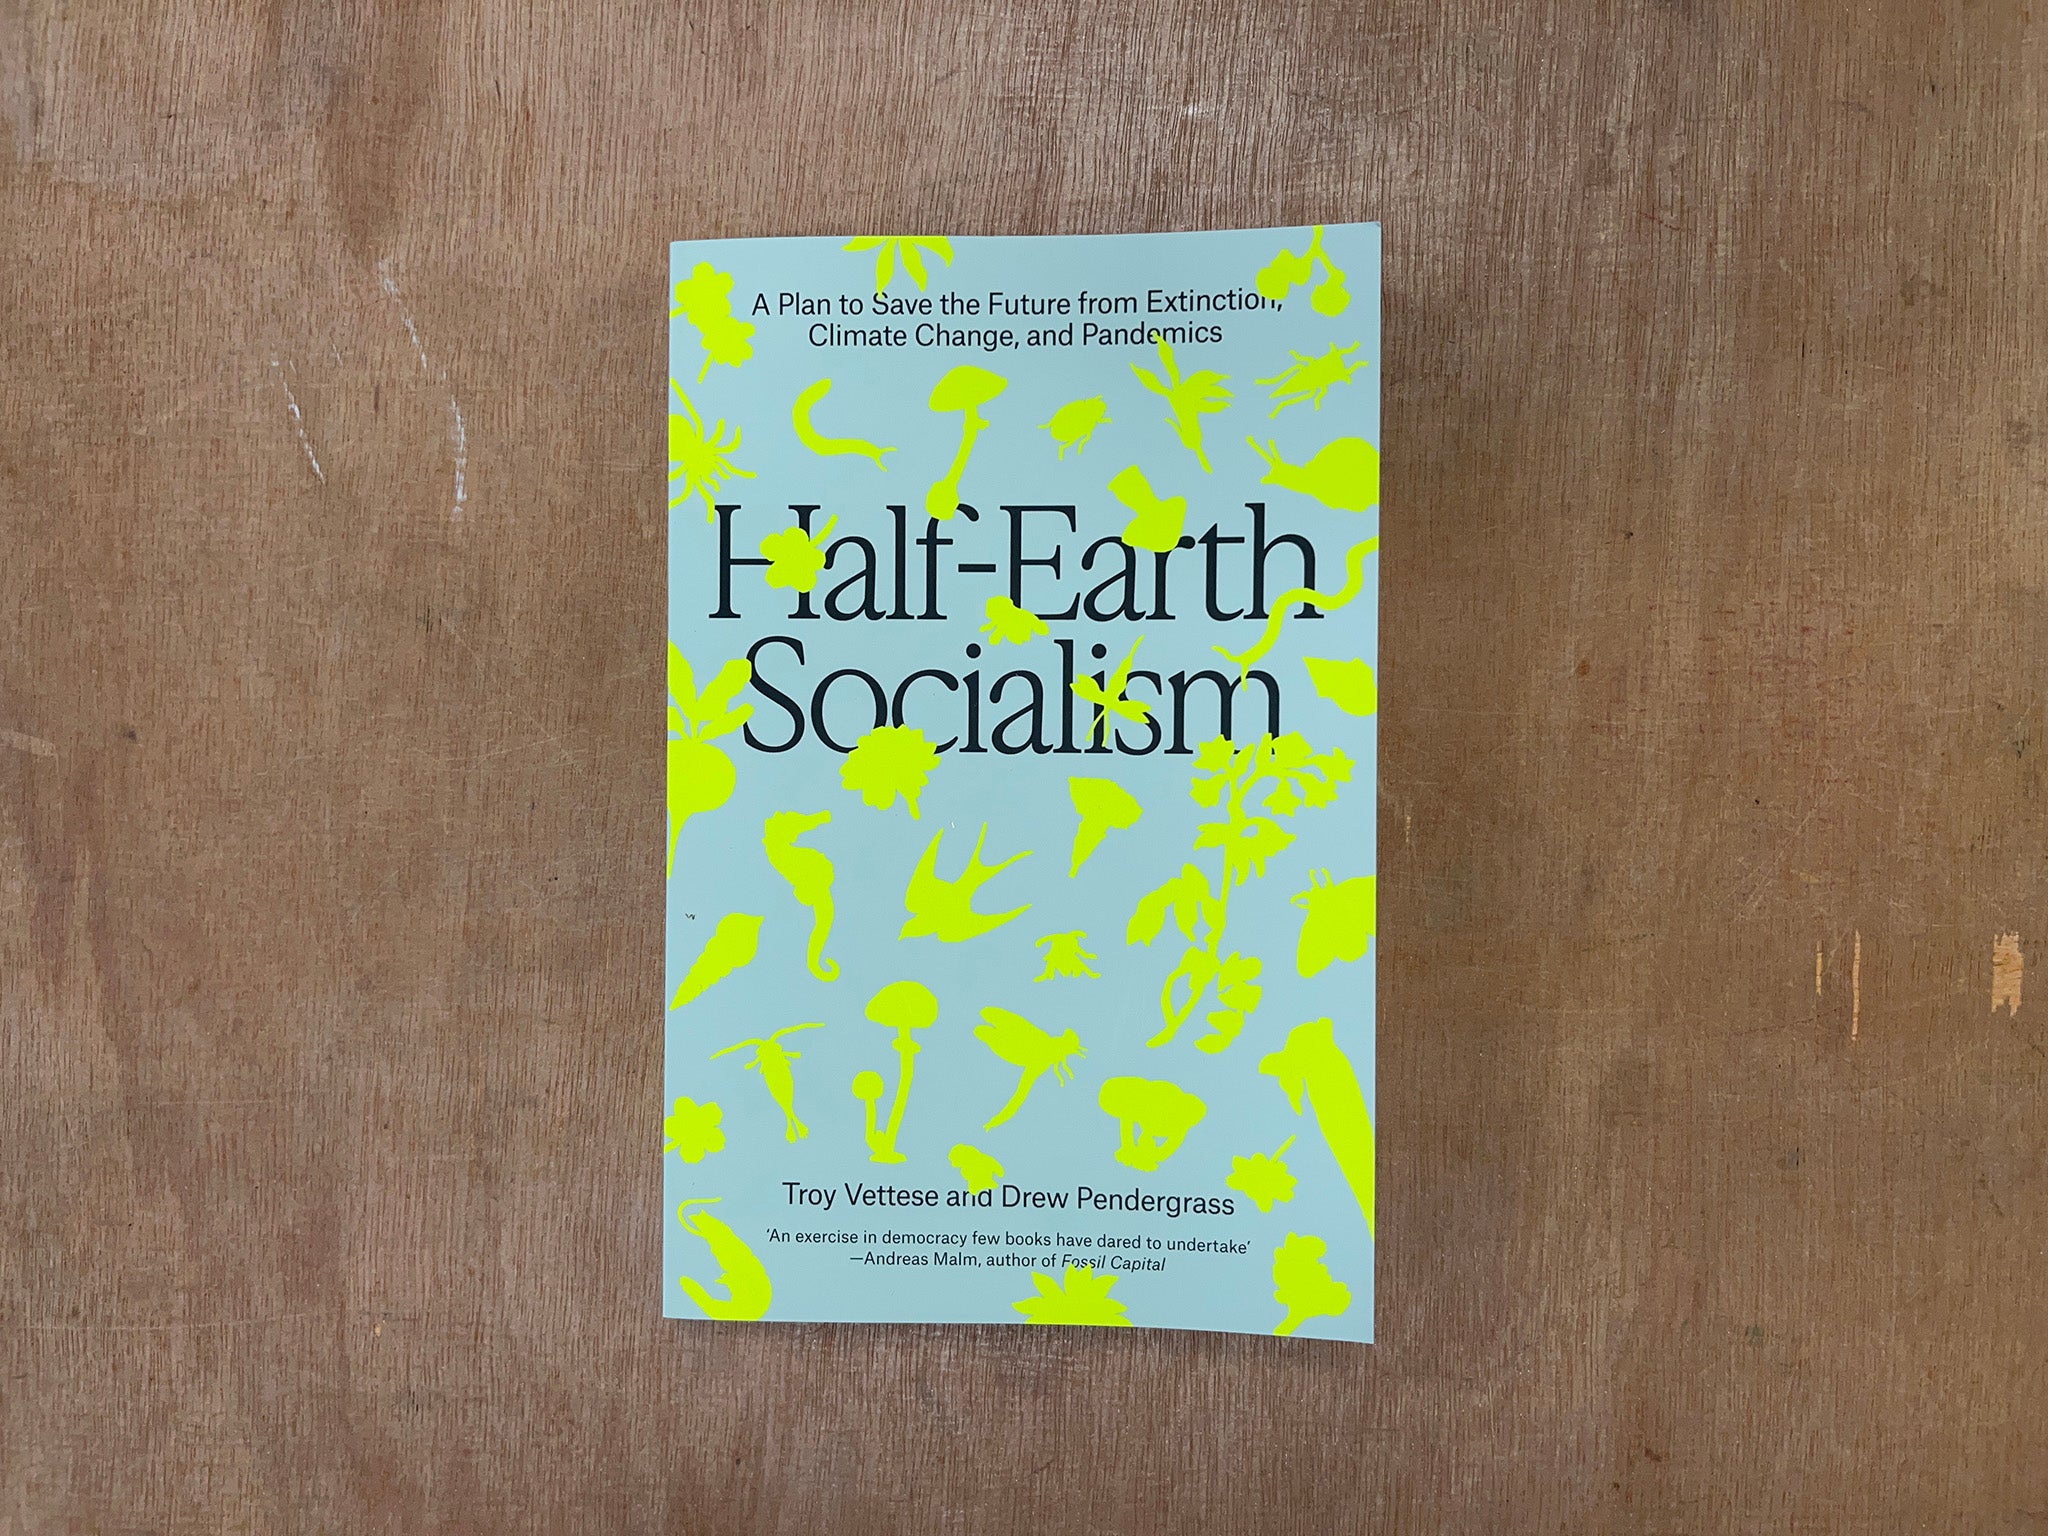 HALF-EARTH SOCIALISM by  Drew Pendergrass & Troy Vettese